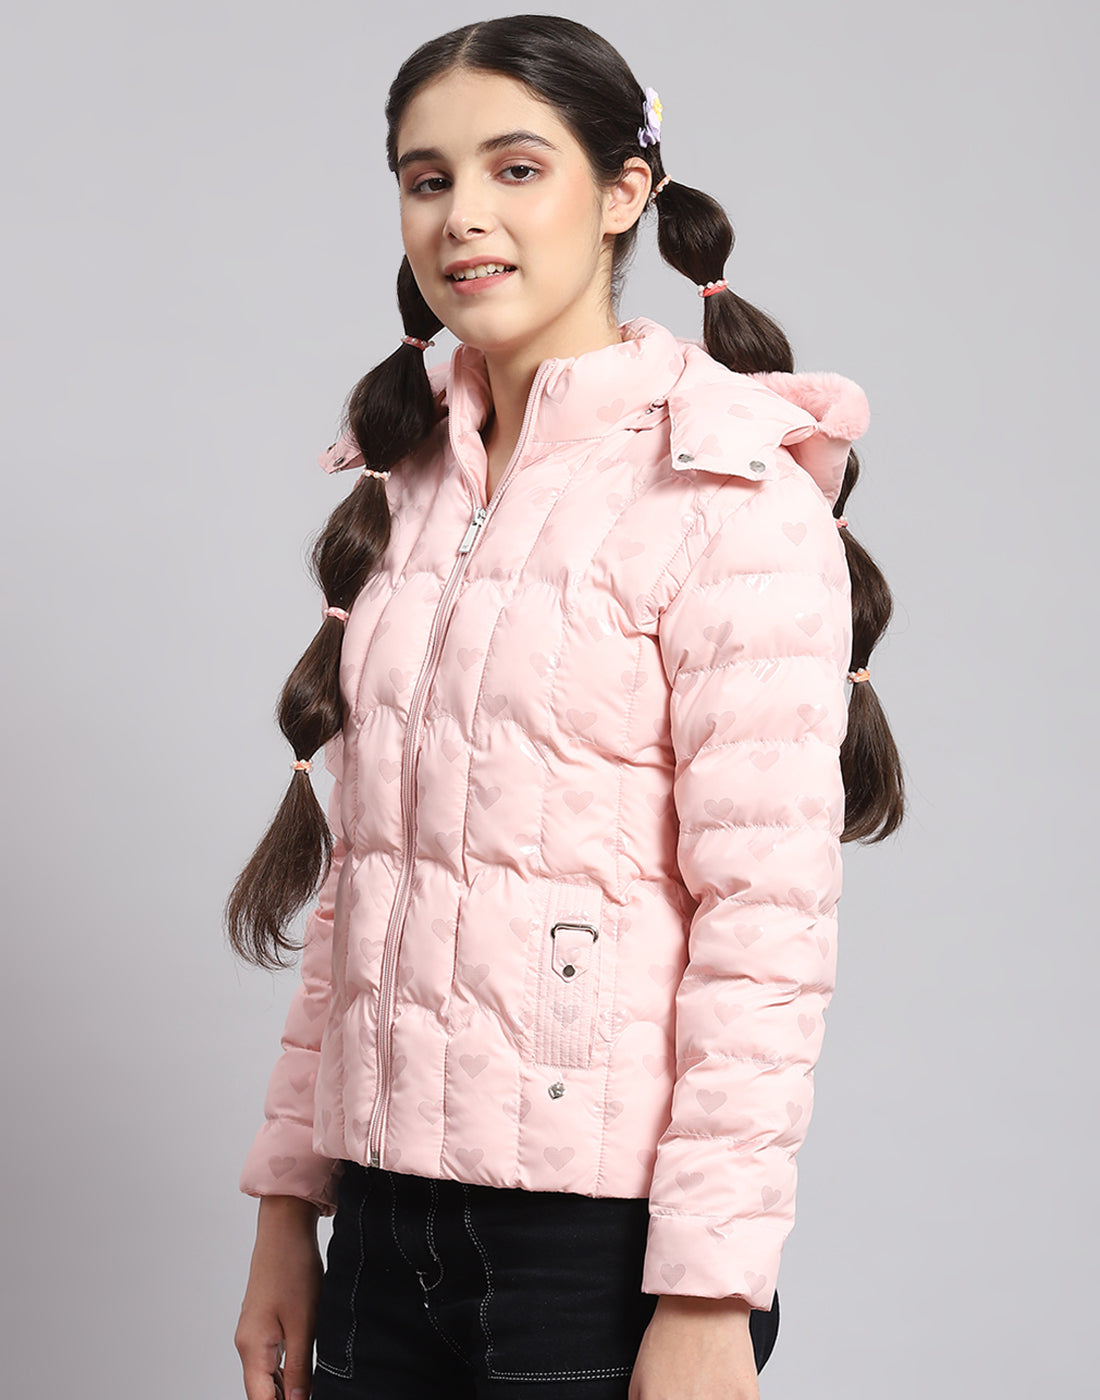 Girls Pink Printed Hooded Full Sleeve Girls Jacket